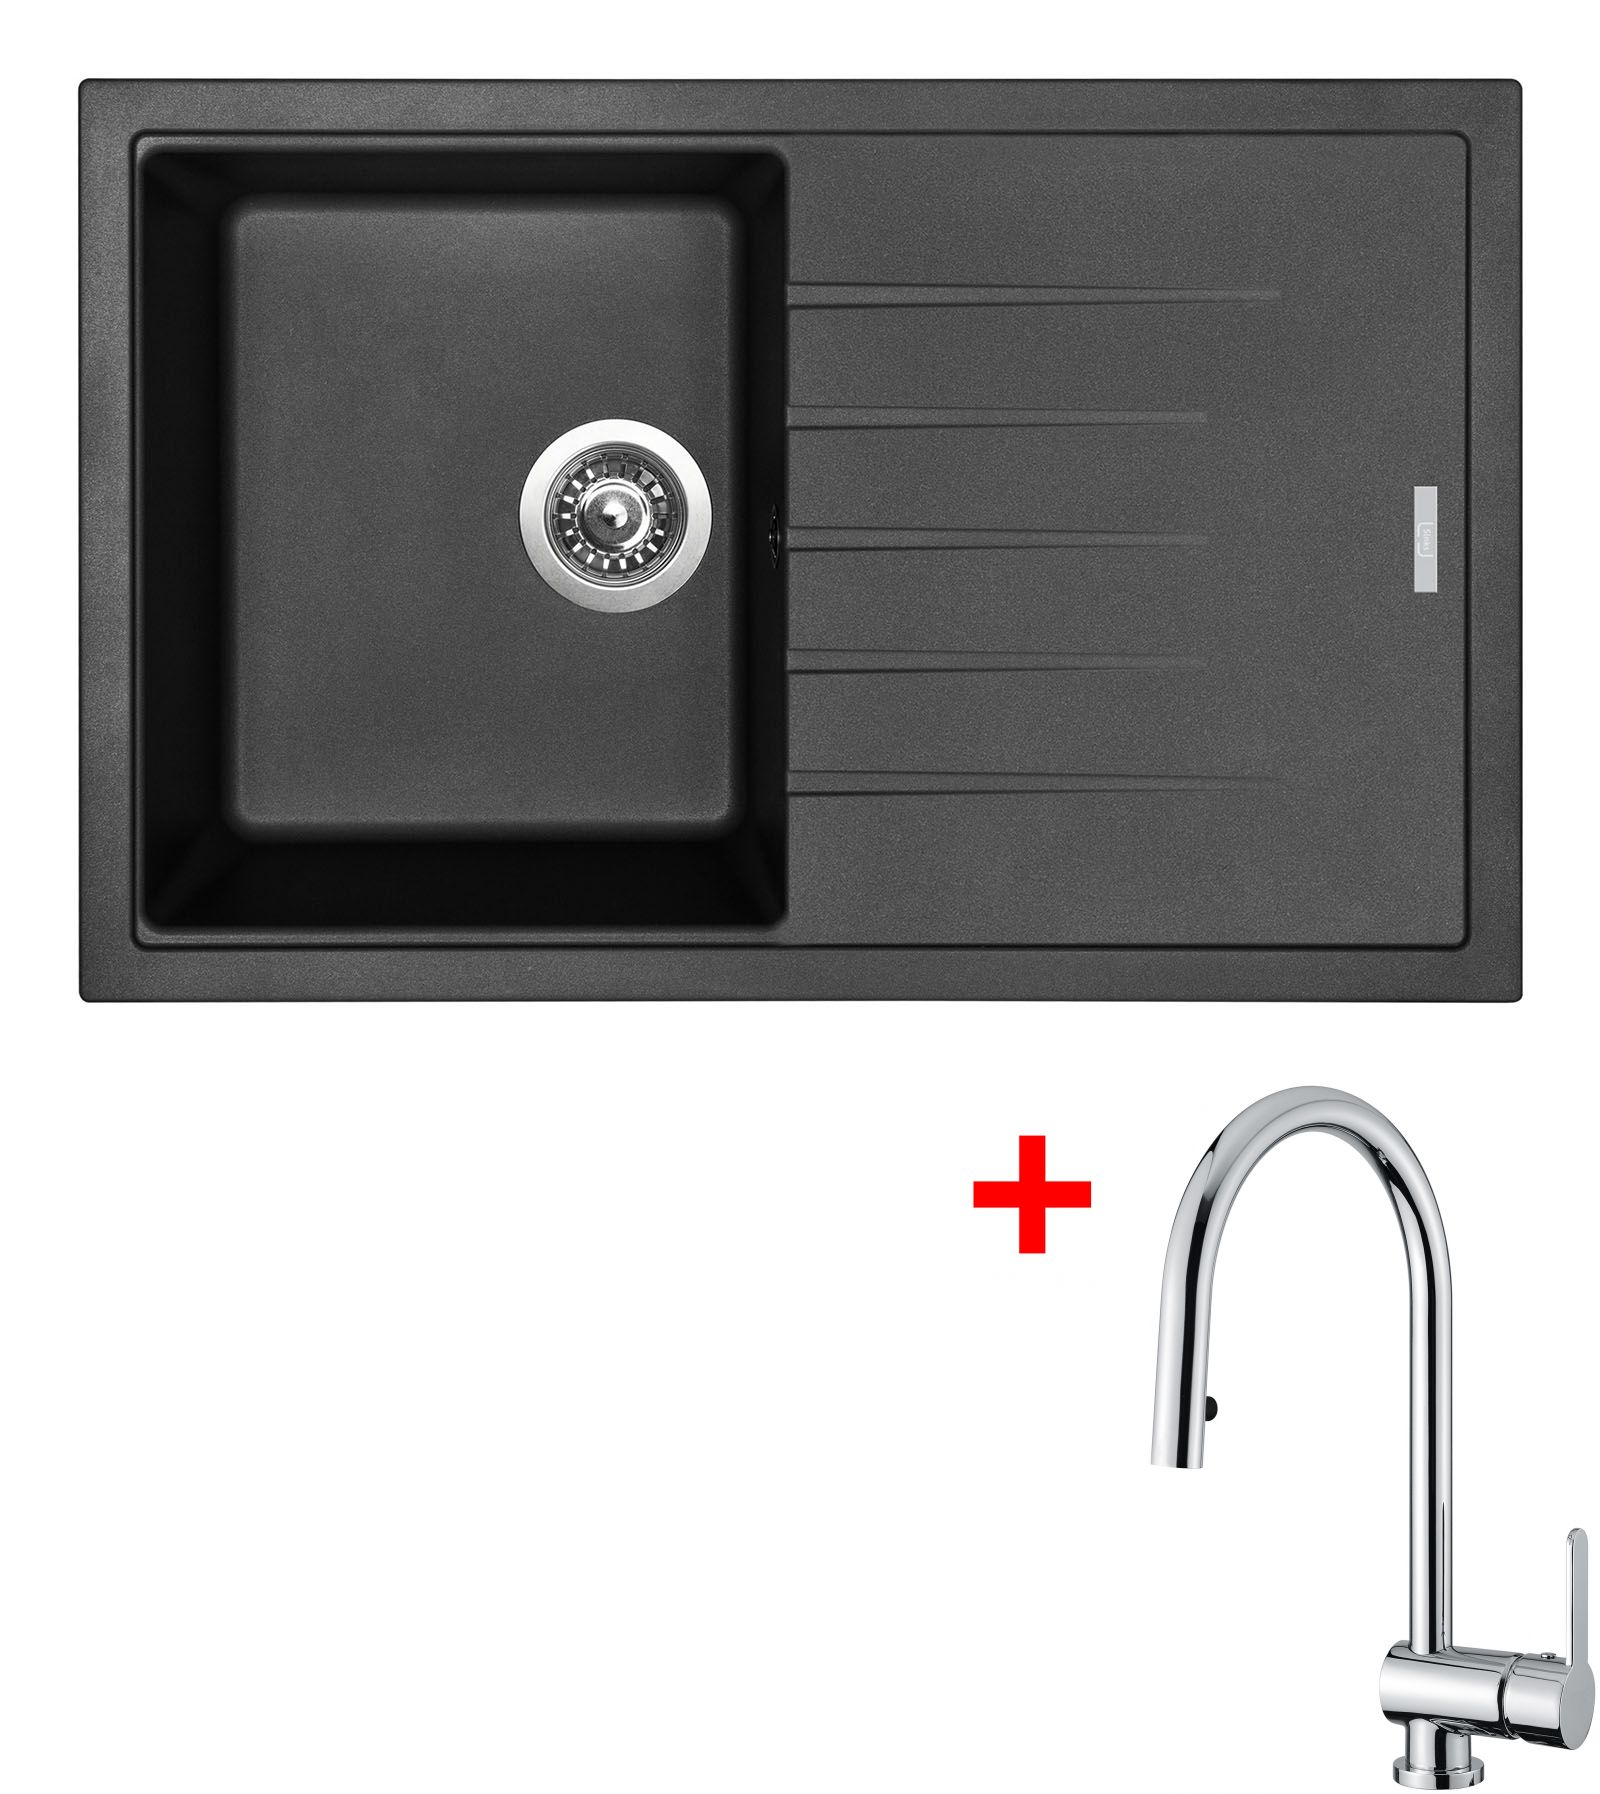 Sinks BEST 780 Metalblack+MIX P